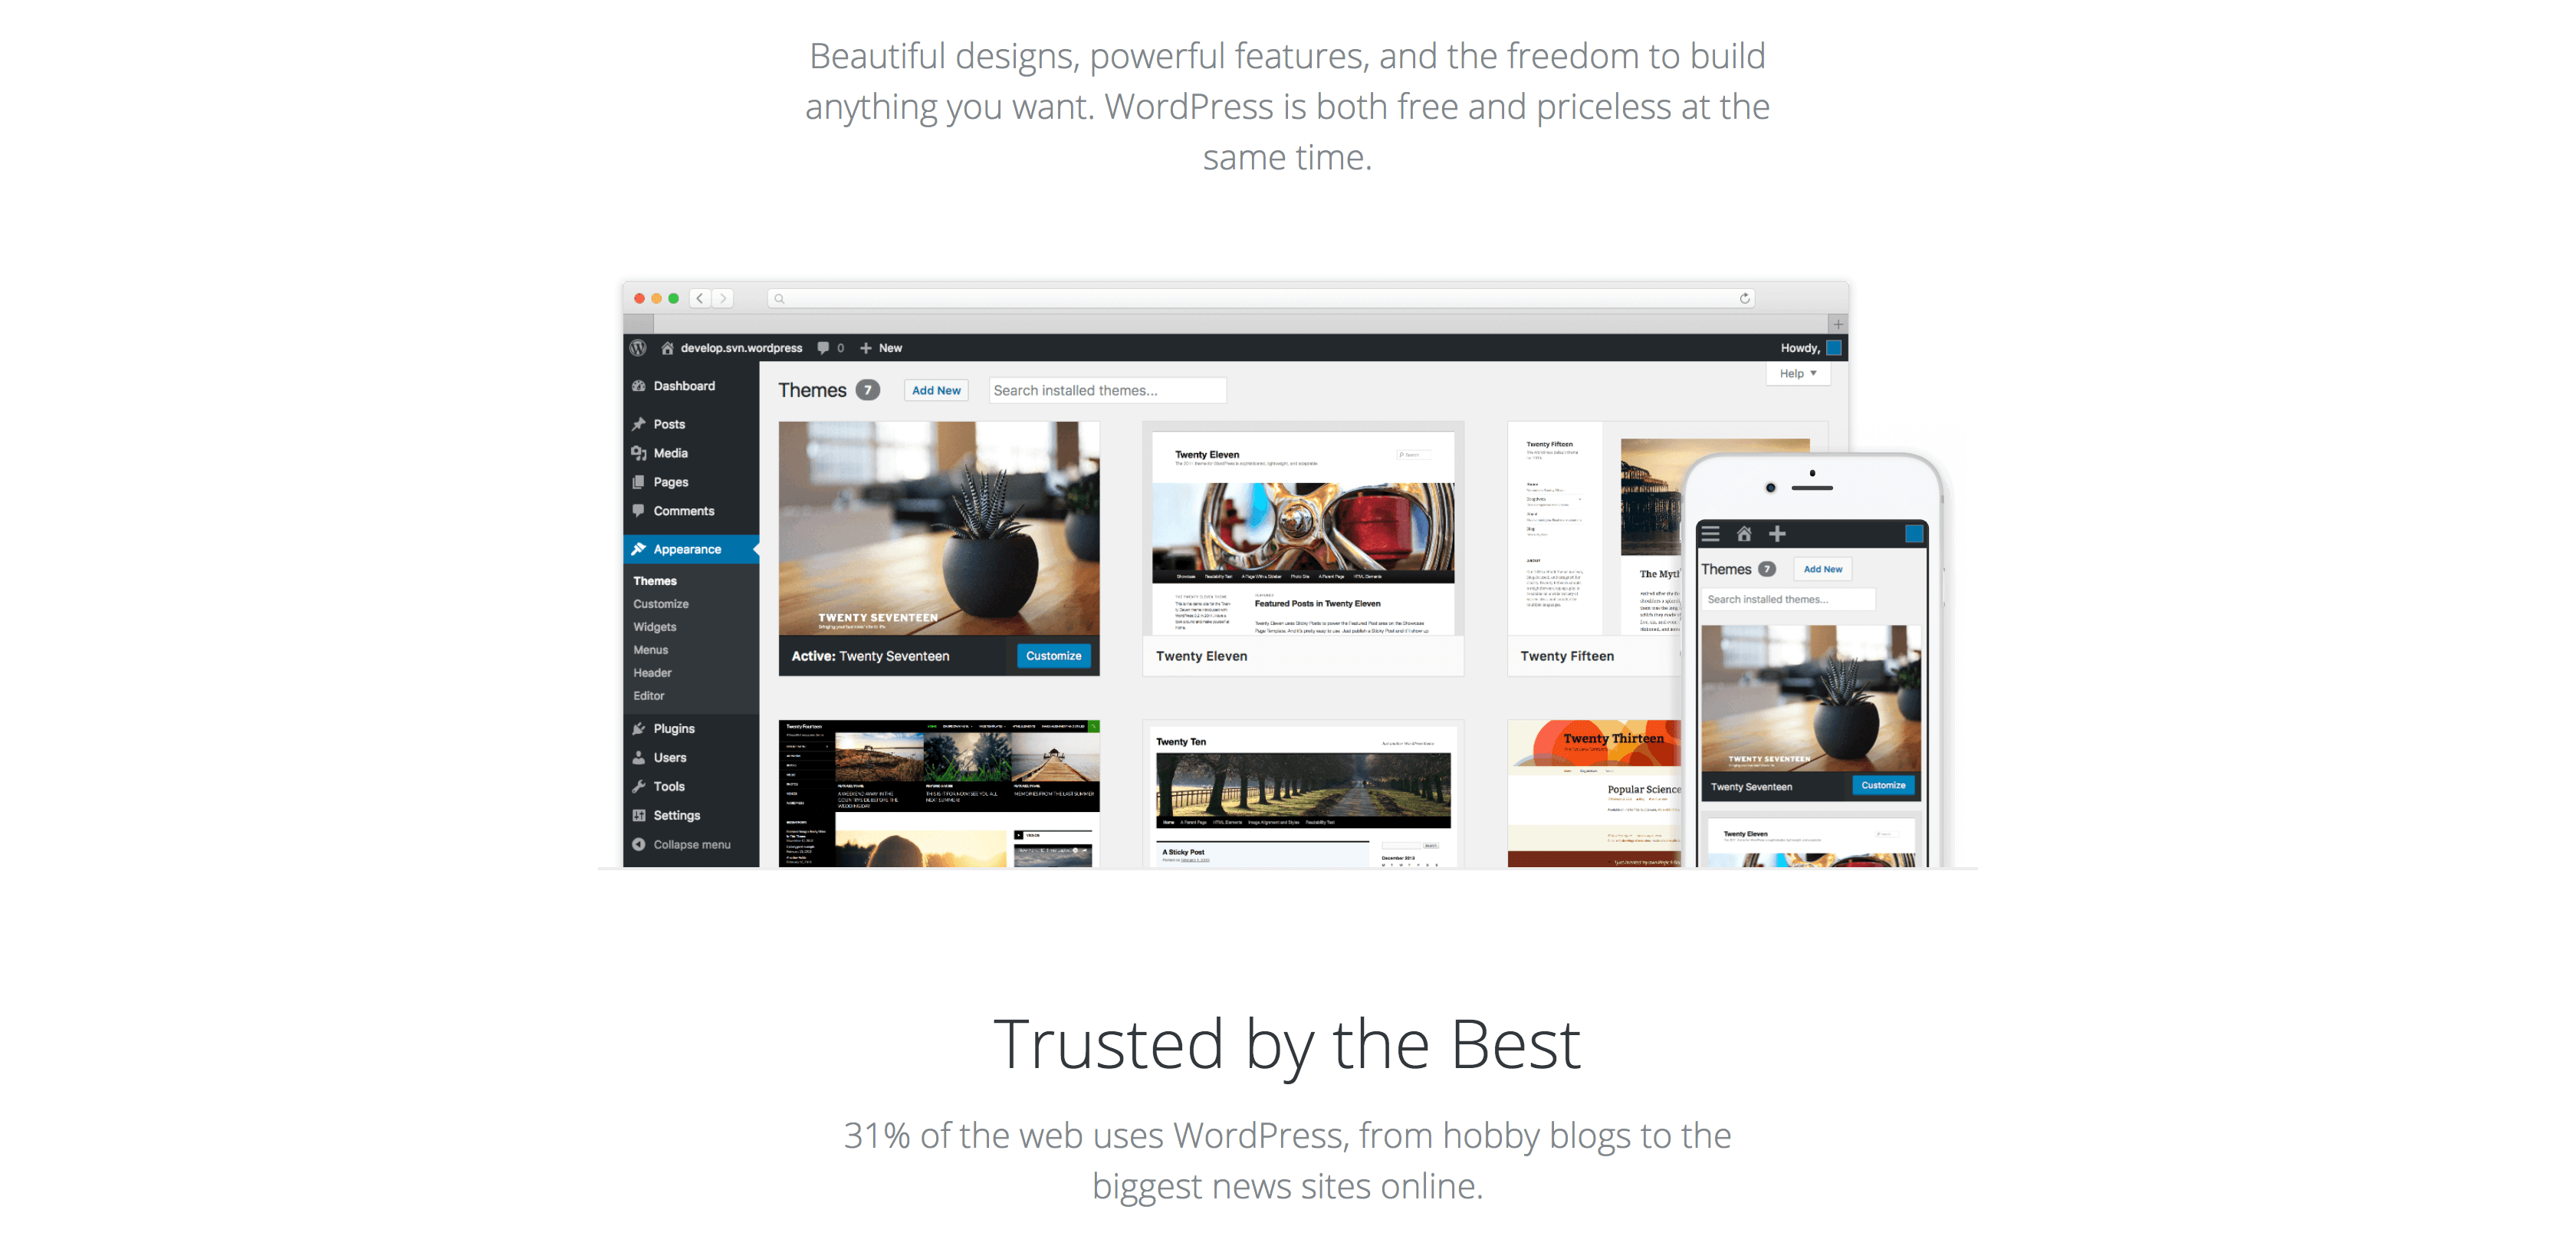 The WordPressorg home page